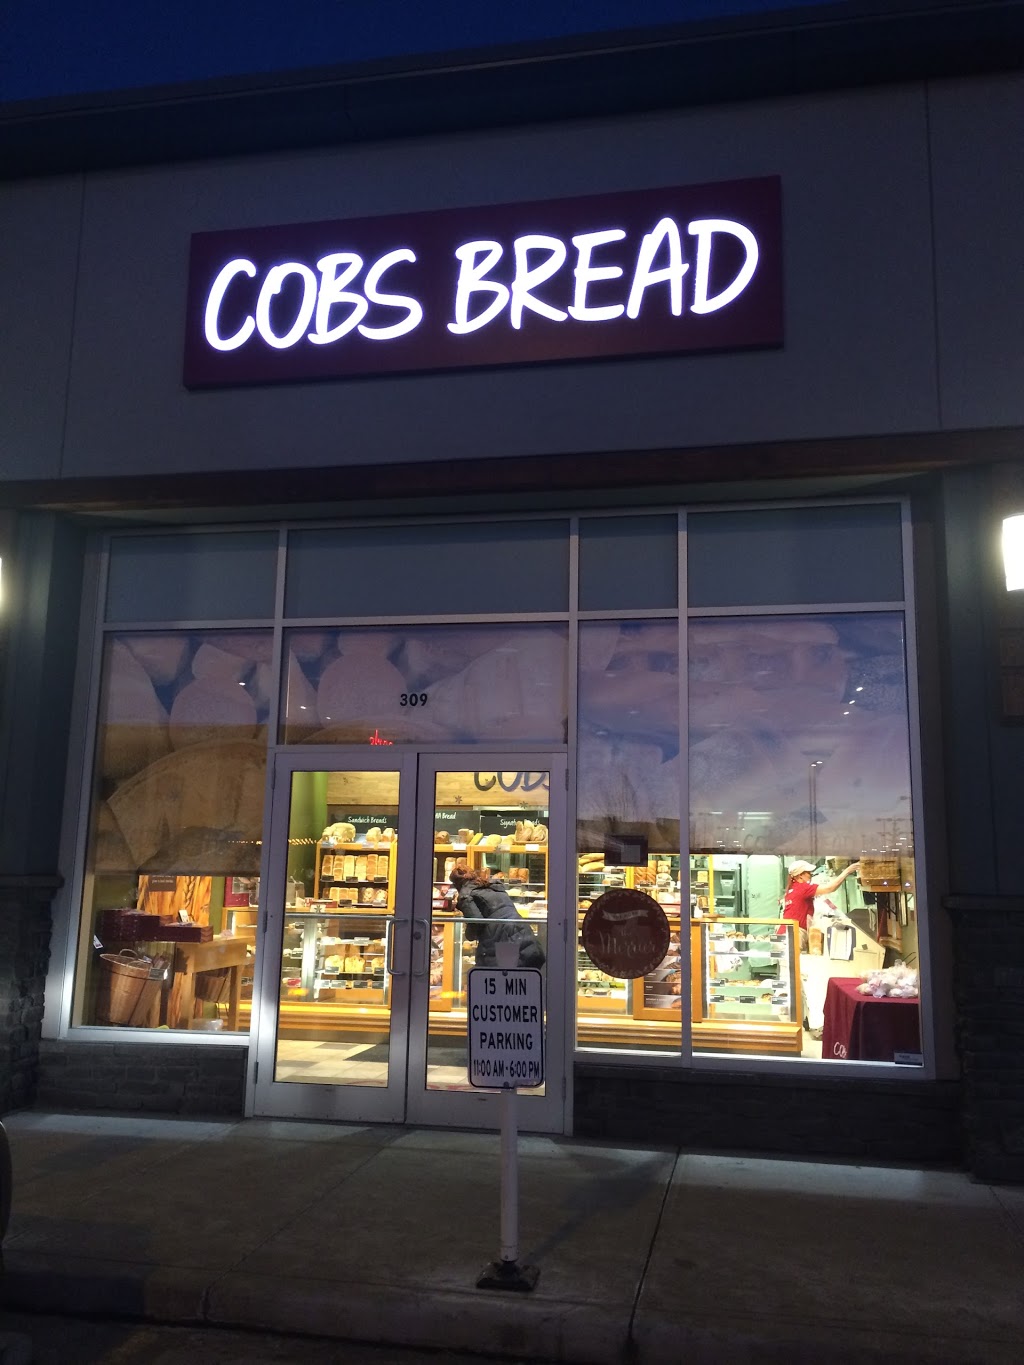 Cobs Bread Bakery 5155 130 Ave Se 309 Calgary Ab T2z 0n3 Canada